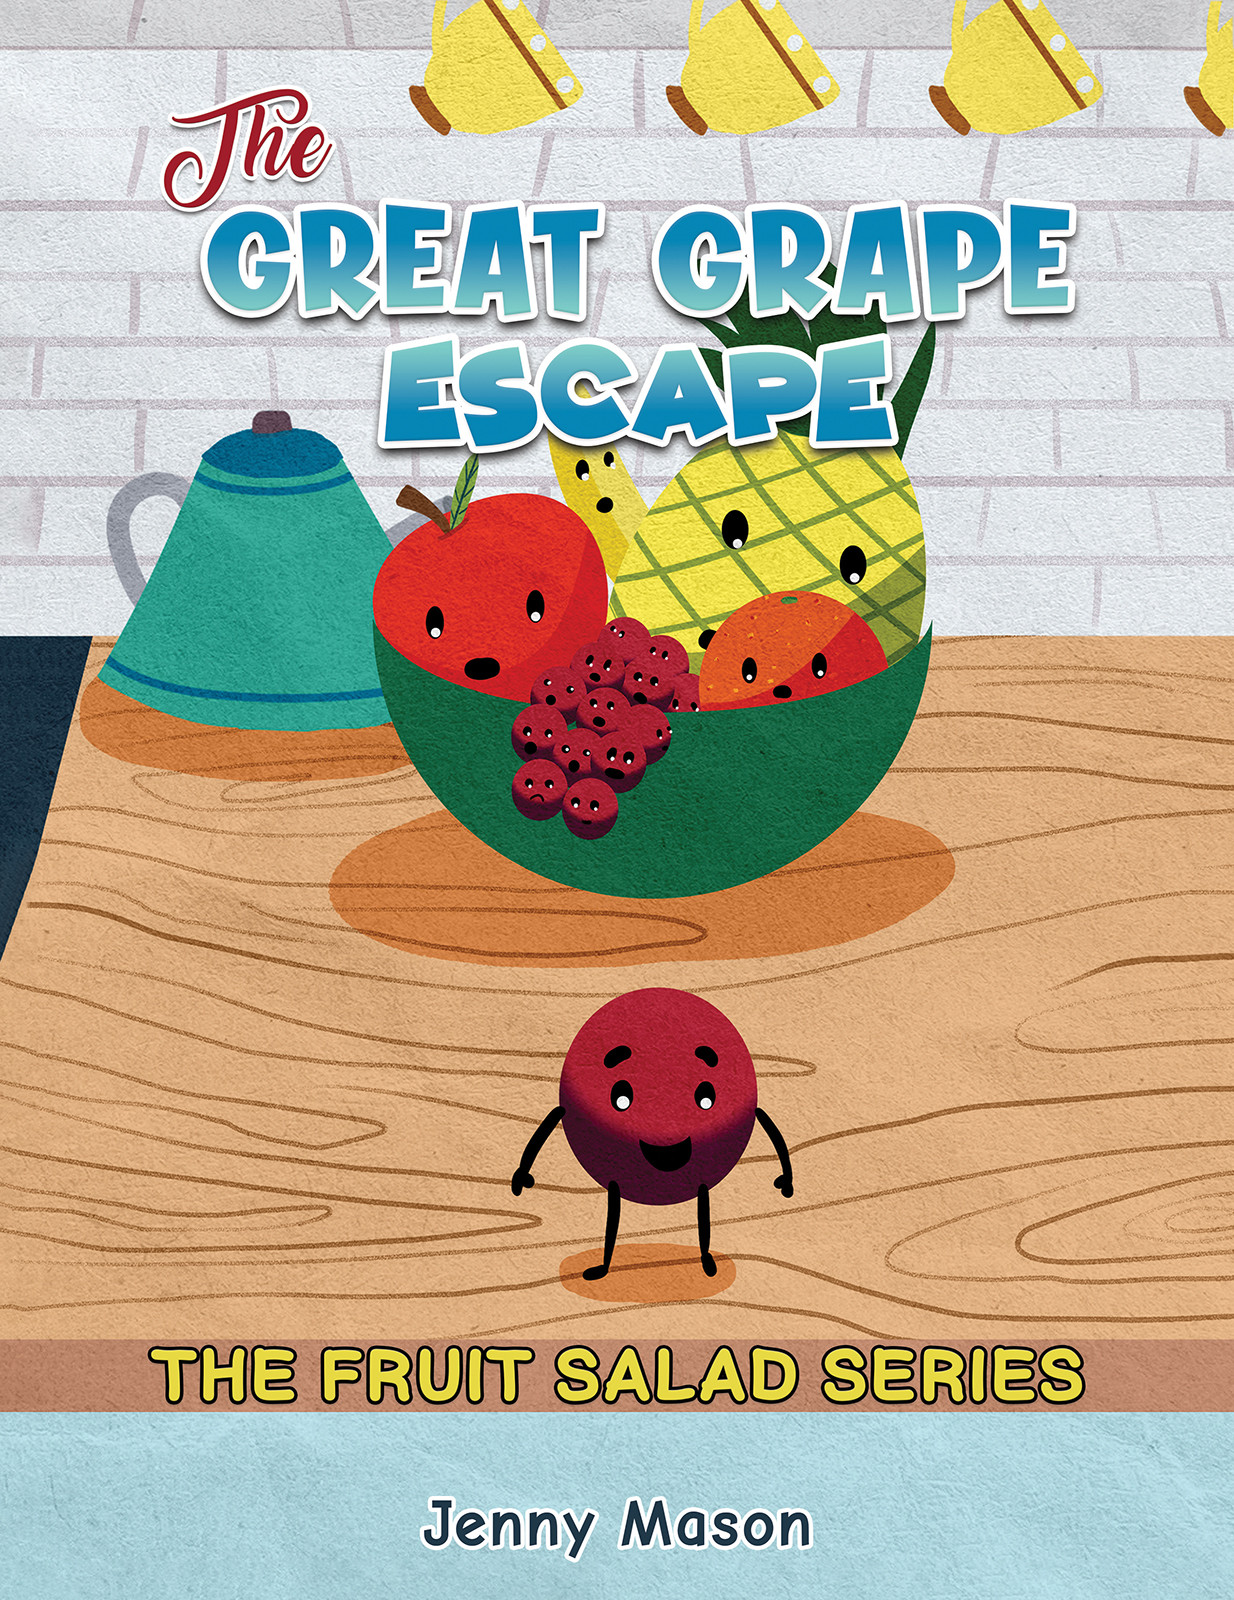 The Fruit Salad Series - The Great Grape Escape